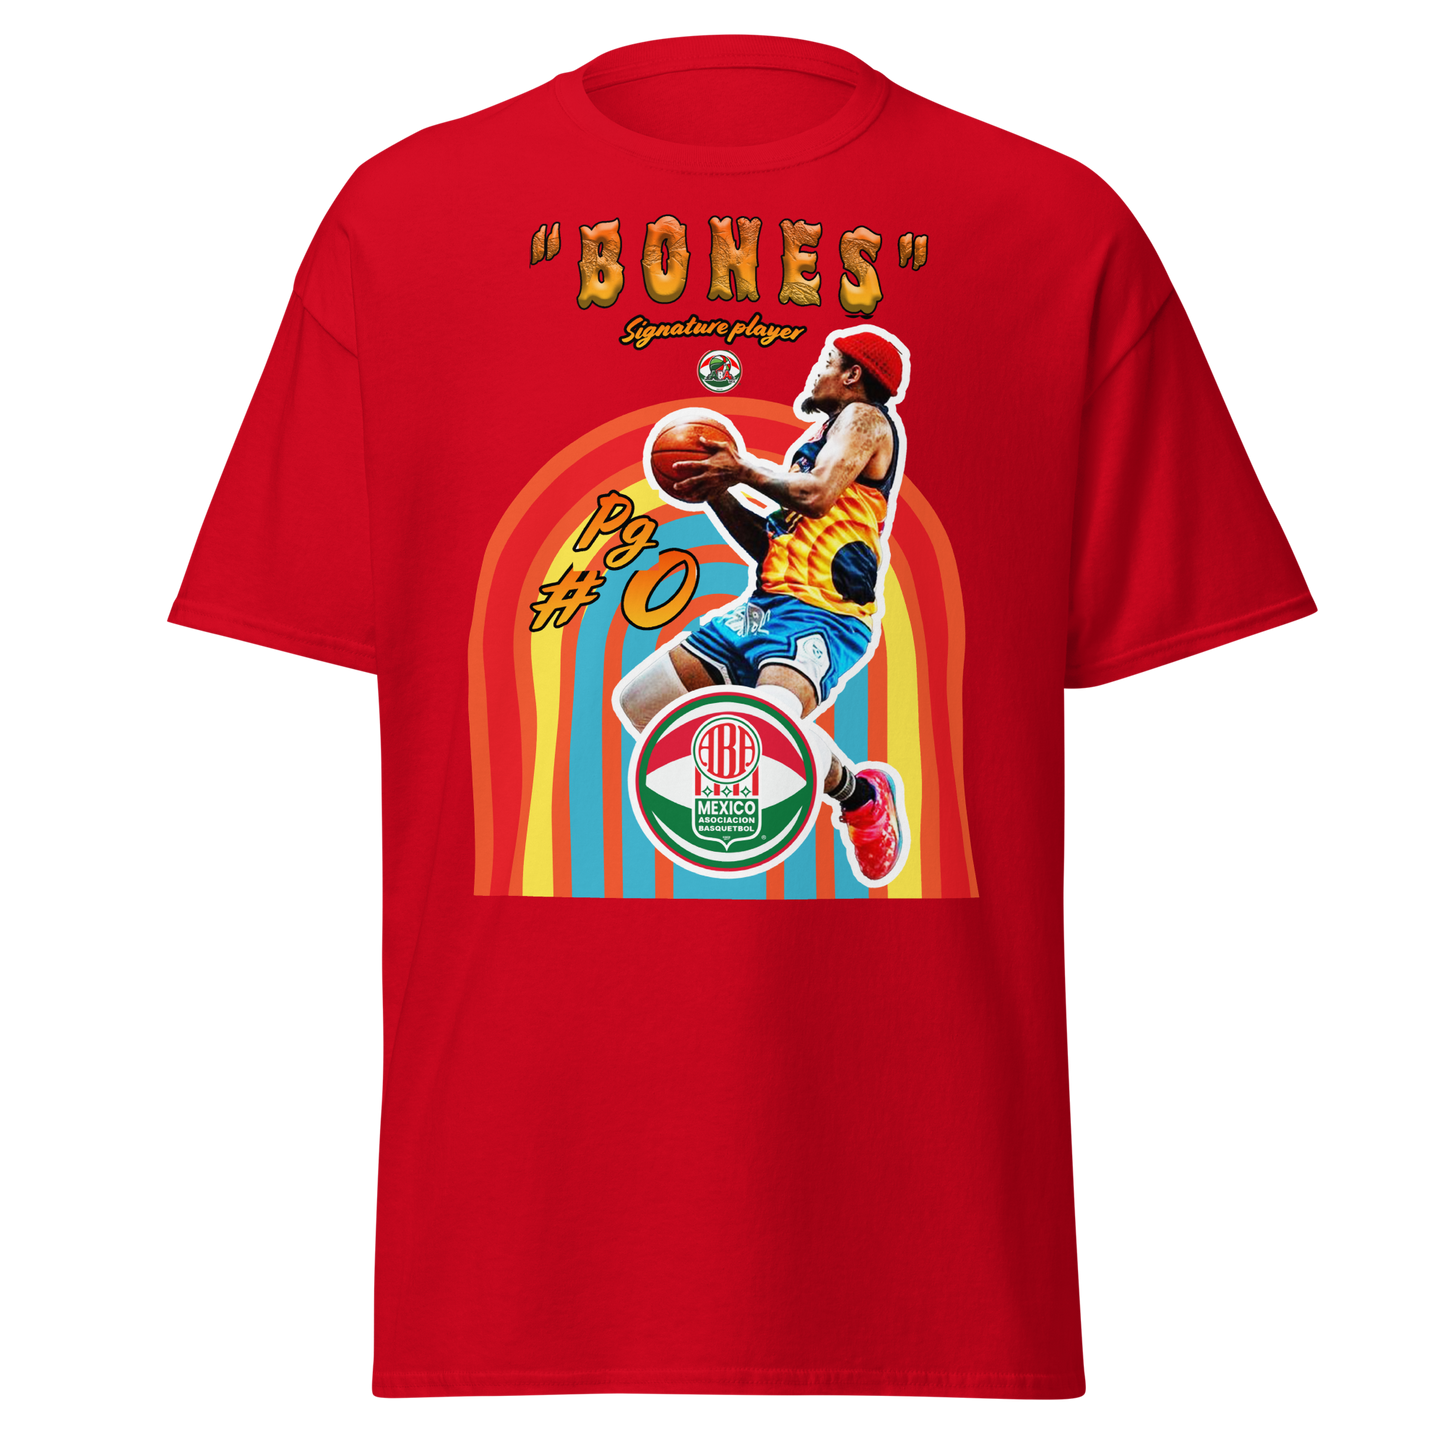 "Bones Bagaunte" Signature T-Shirt